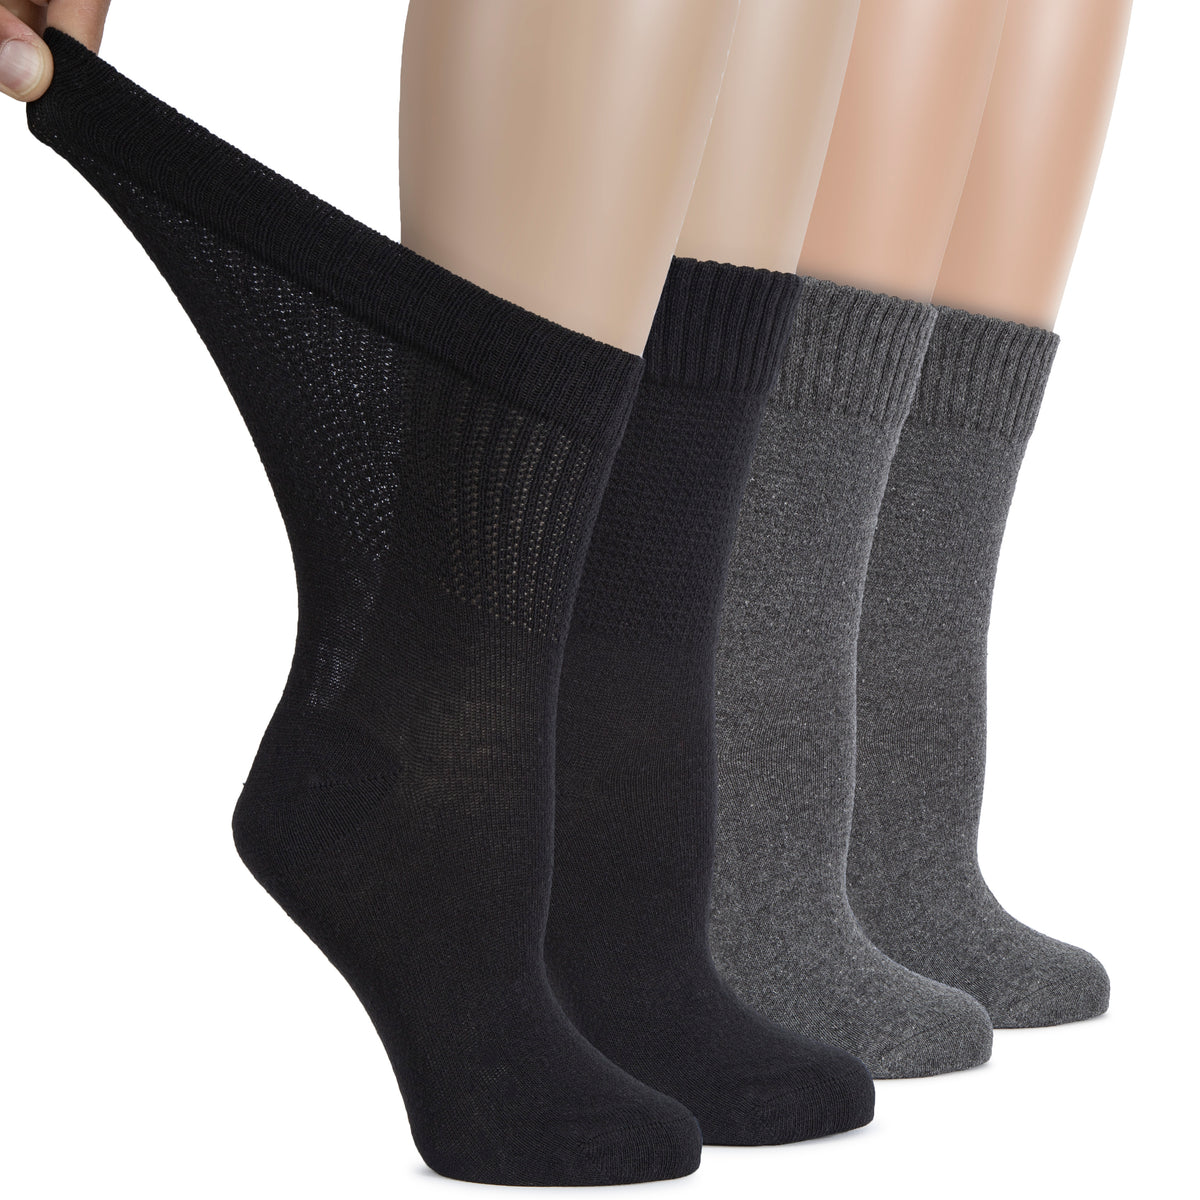 Hugh Ugoli Cotton Diabetic Women's Socks, Crew, Loose, Wide Stretchy, Thin, Seamless Toe and Non-Binding Top, 4 Pairs | Shoe Size: 9-12 | White / LightBeige